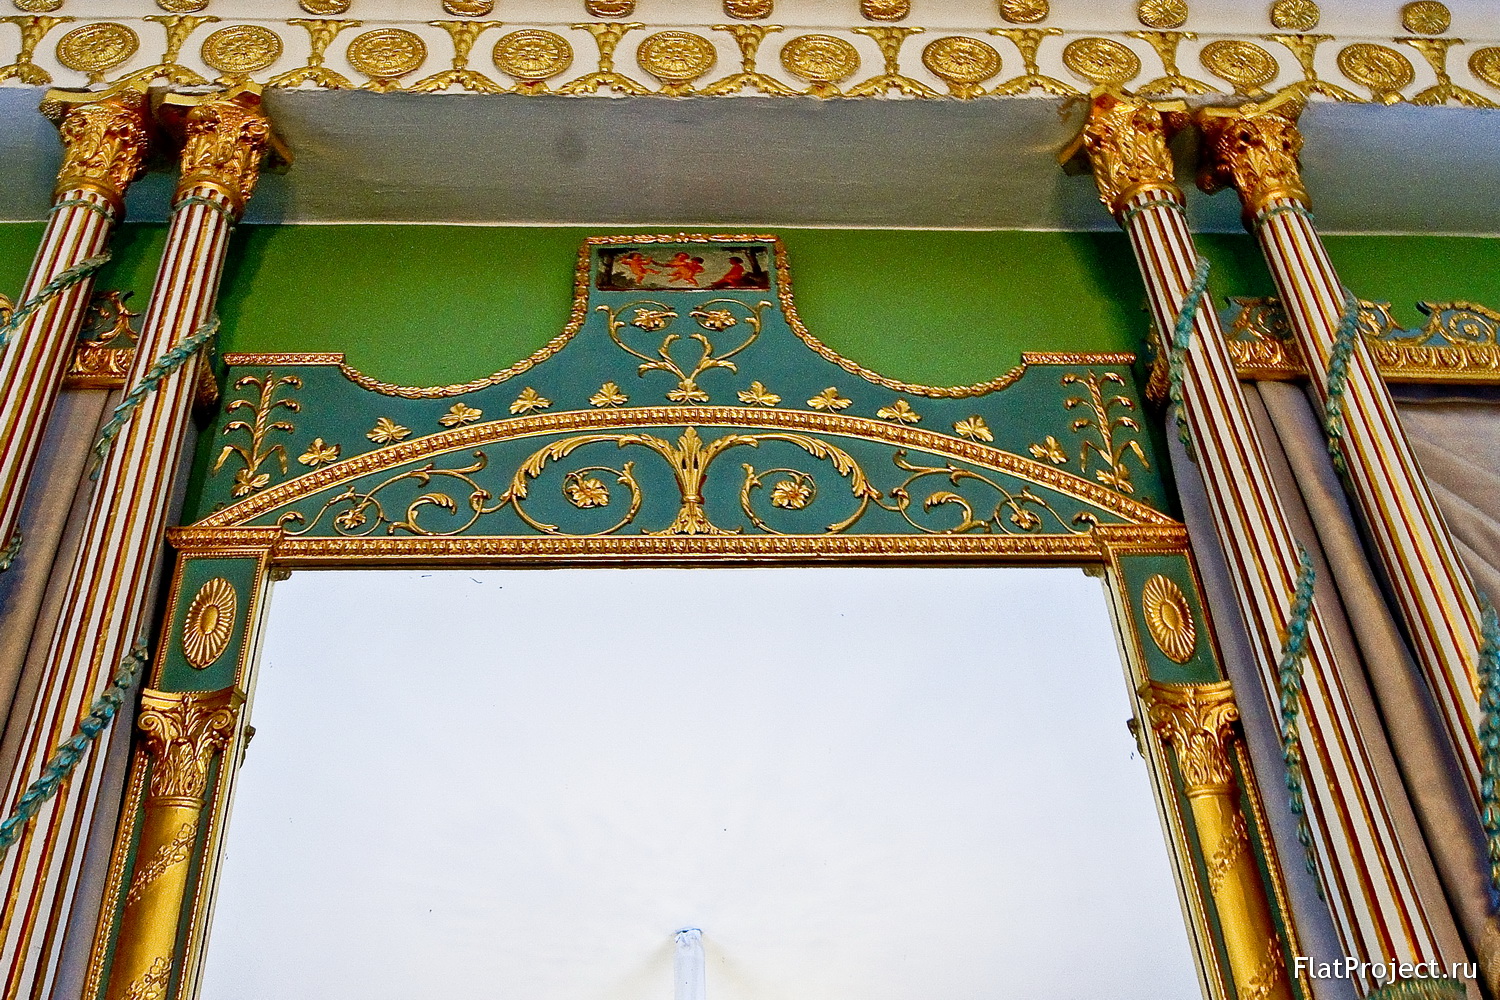 The Catherine Palace interiors – photo 42